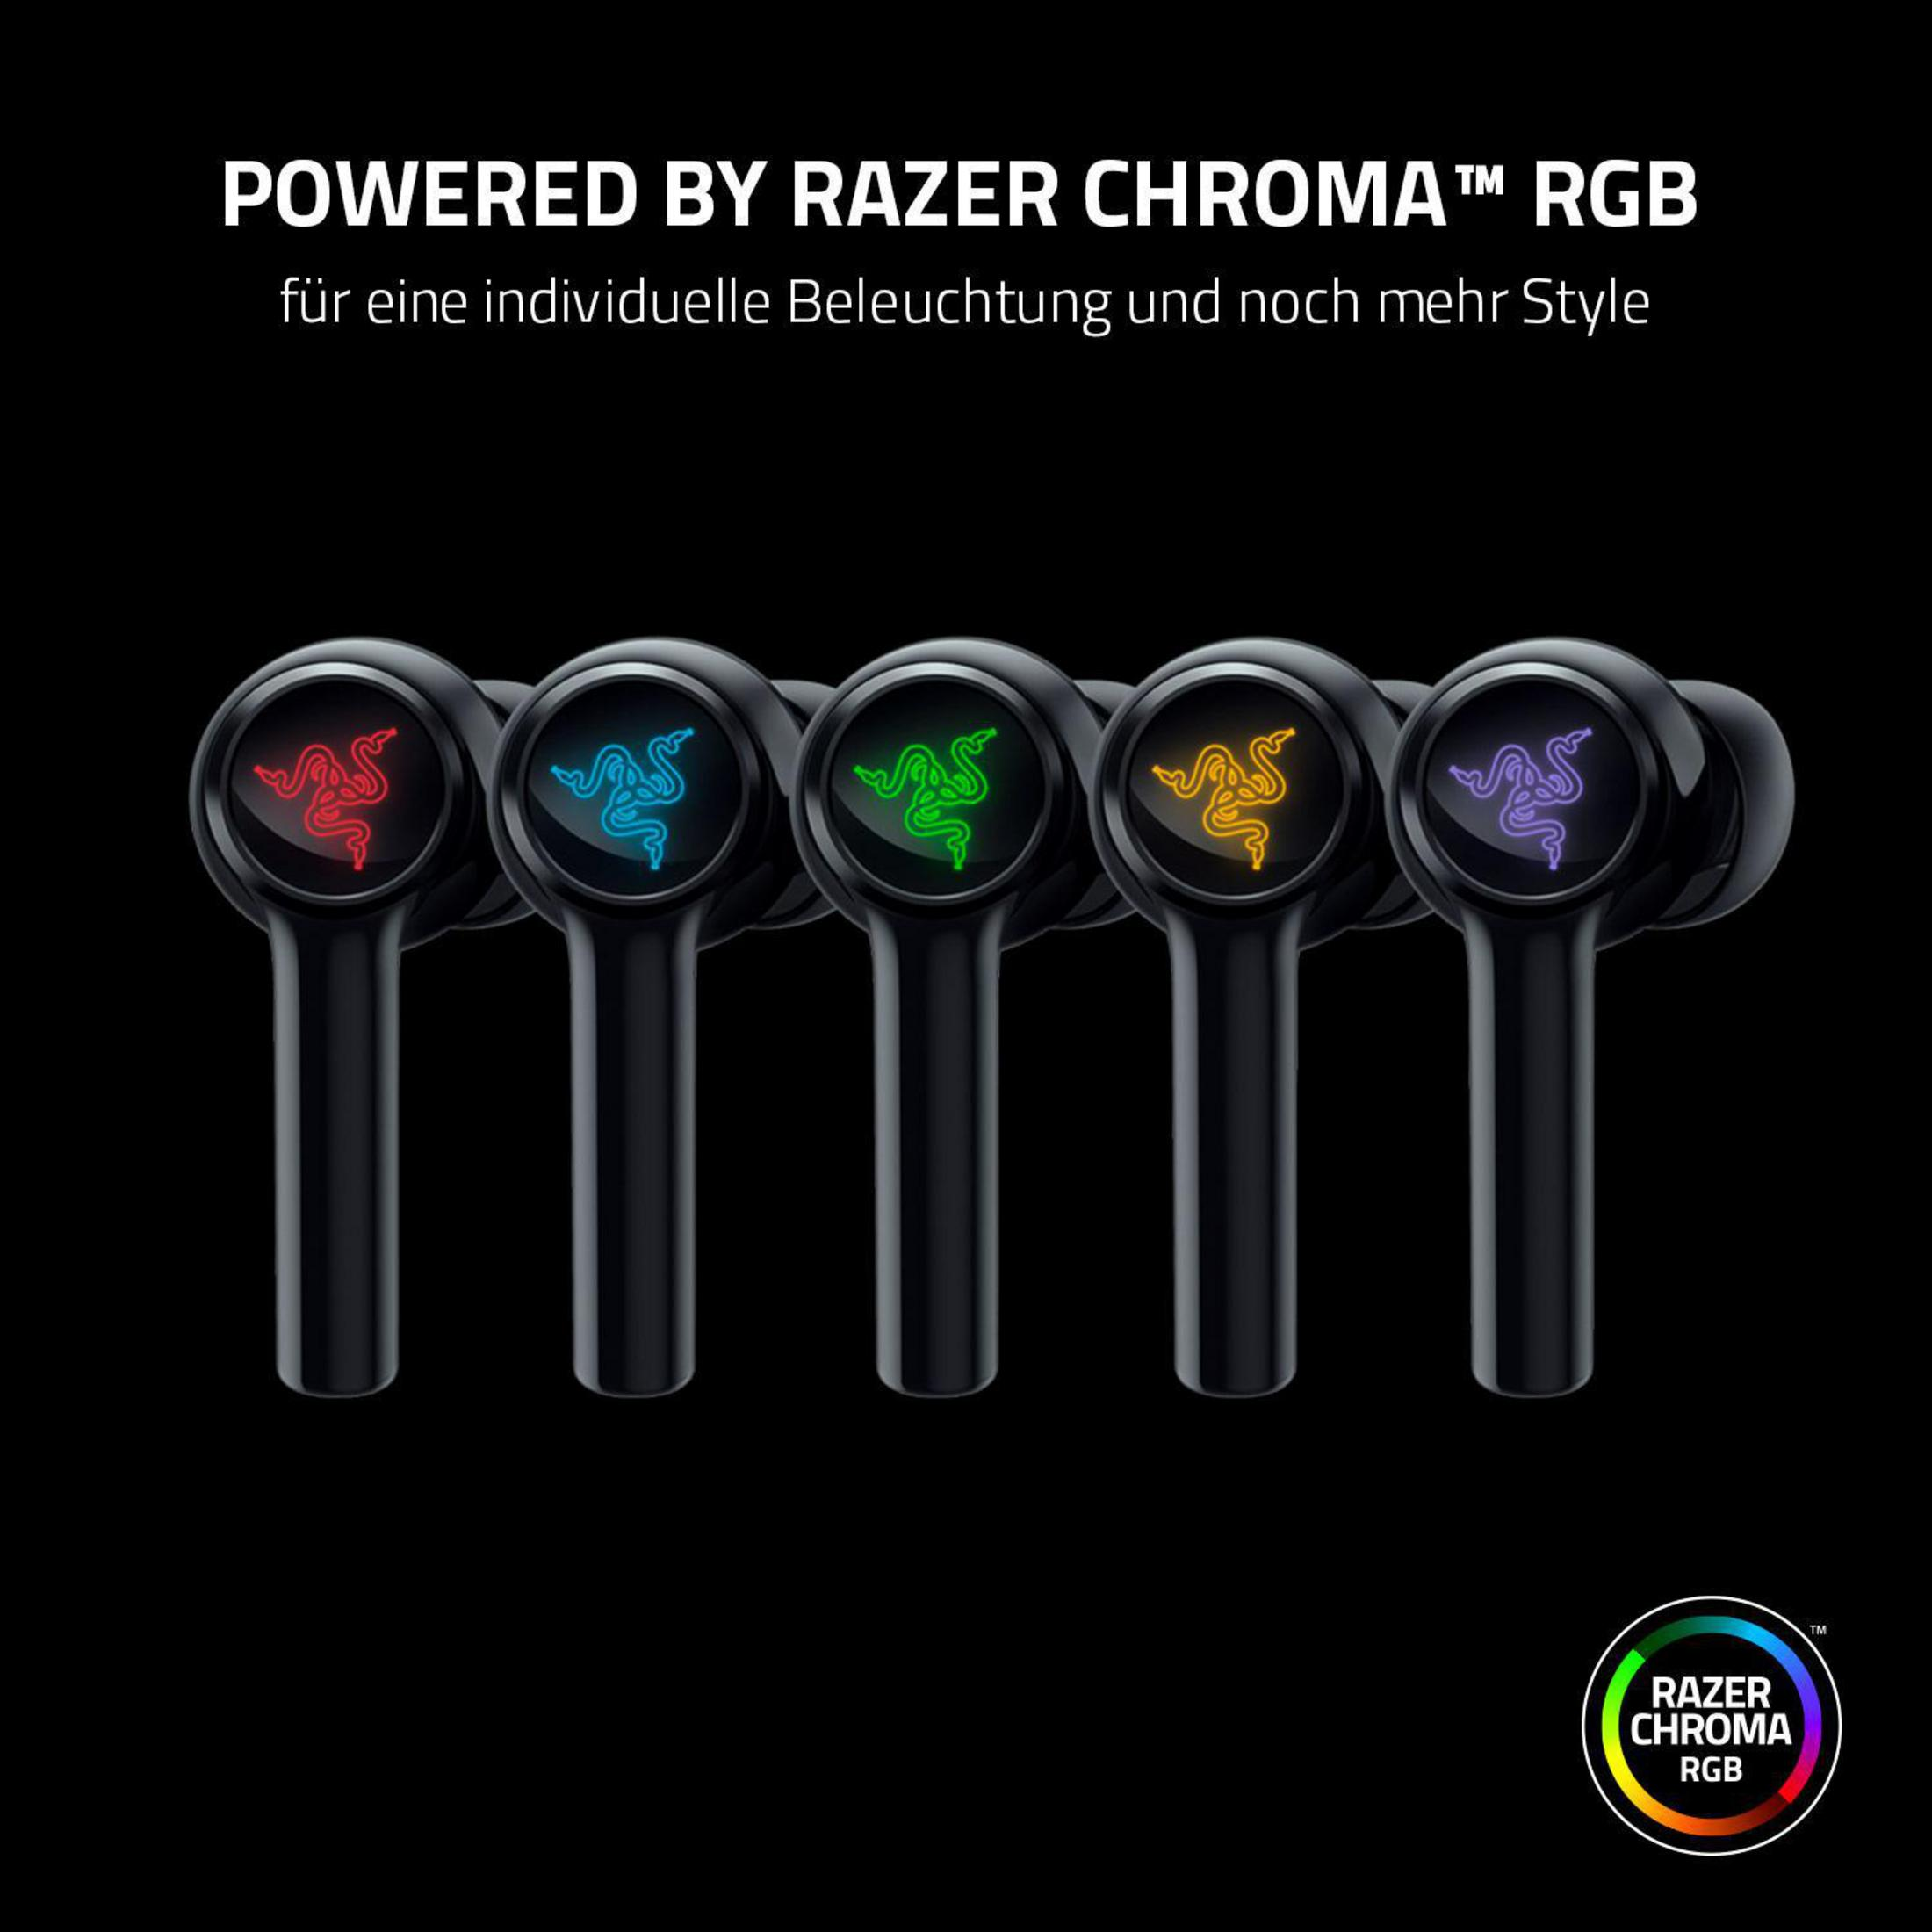 RAZER RZ12-03820100-R3G1 HAMMERHEAD Kopfhörer WIRELESS TRUE Bluetooth 2021, Schwarz In-ear